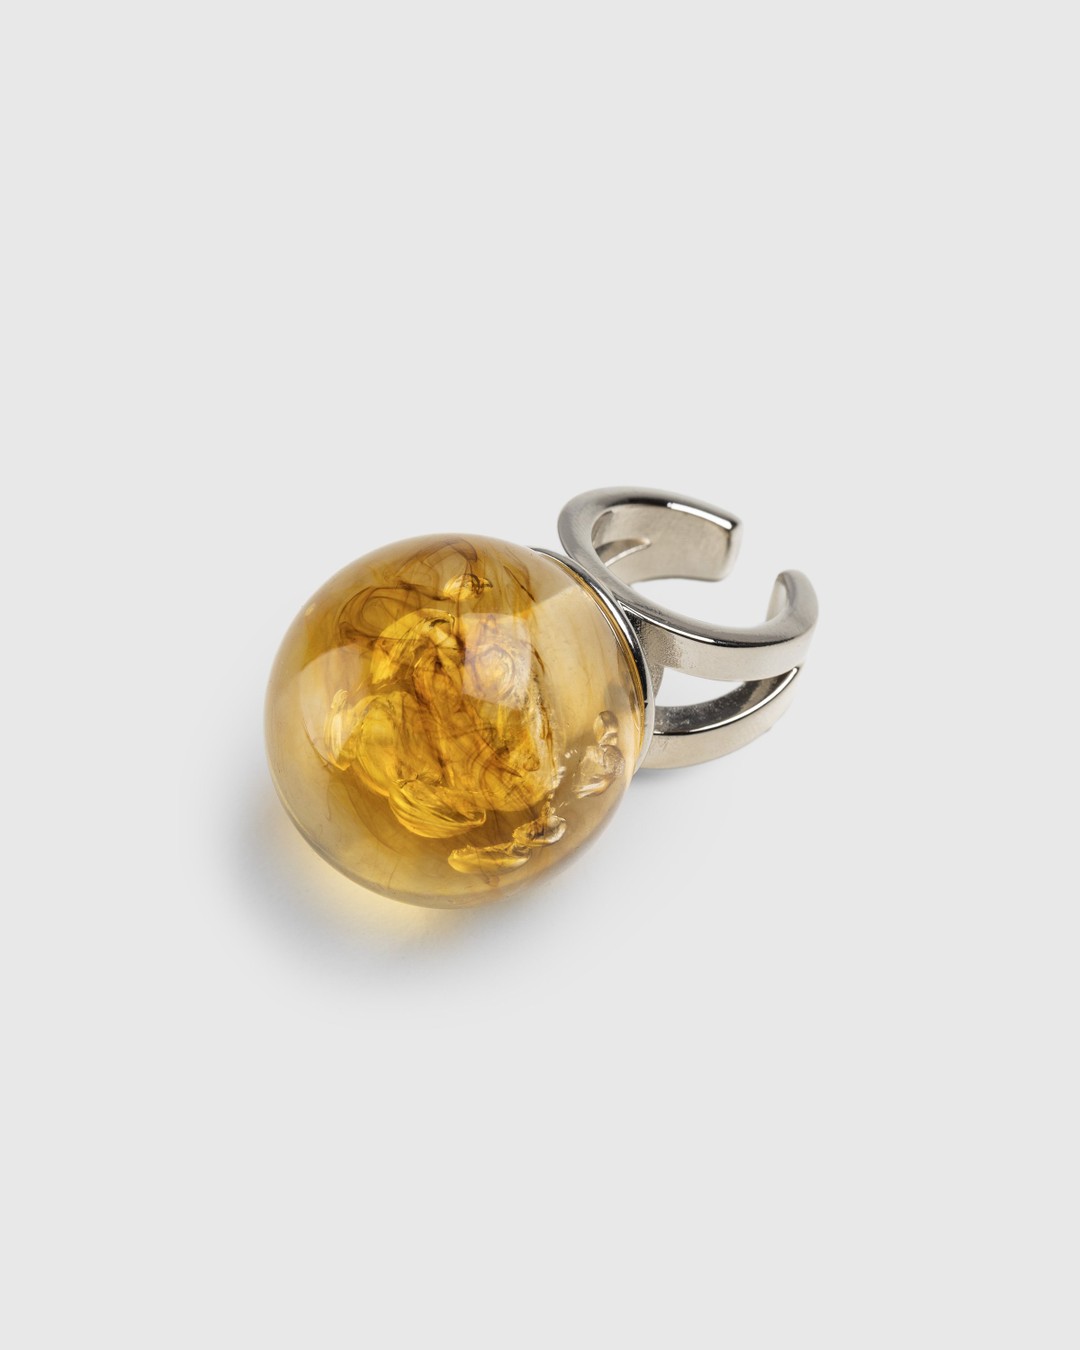 Jean Paul Gaultier – Smoke Ball Ring Caramel | Highsnobiety Shop